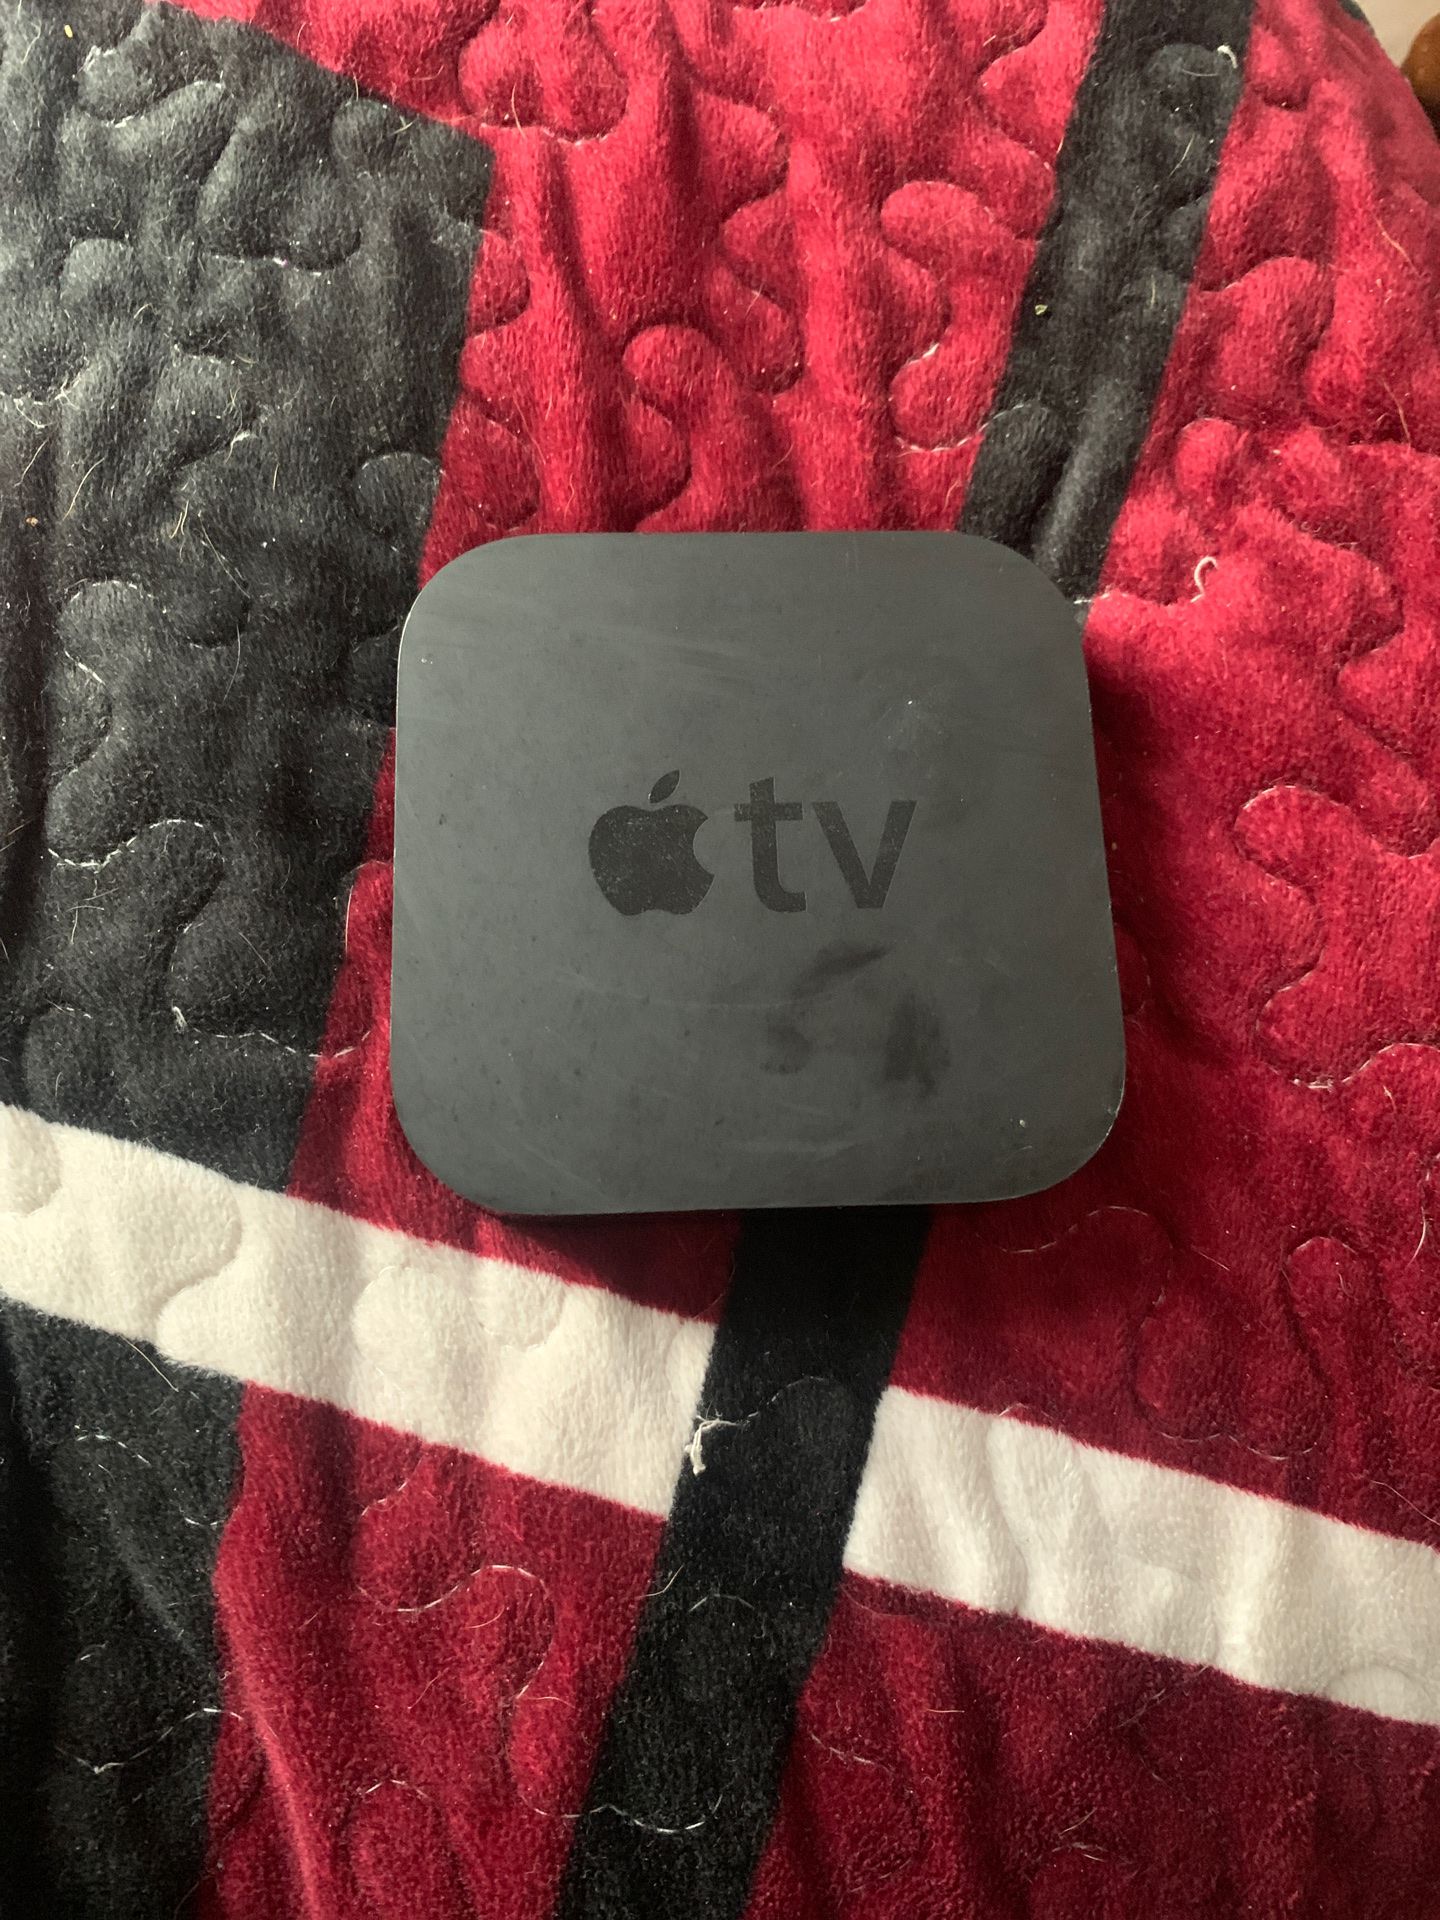 Apple TV 3rd Gen $30